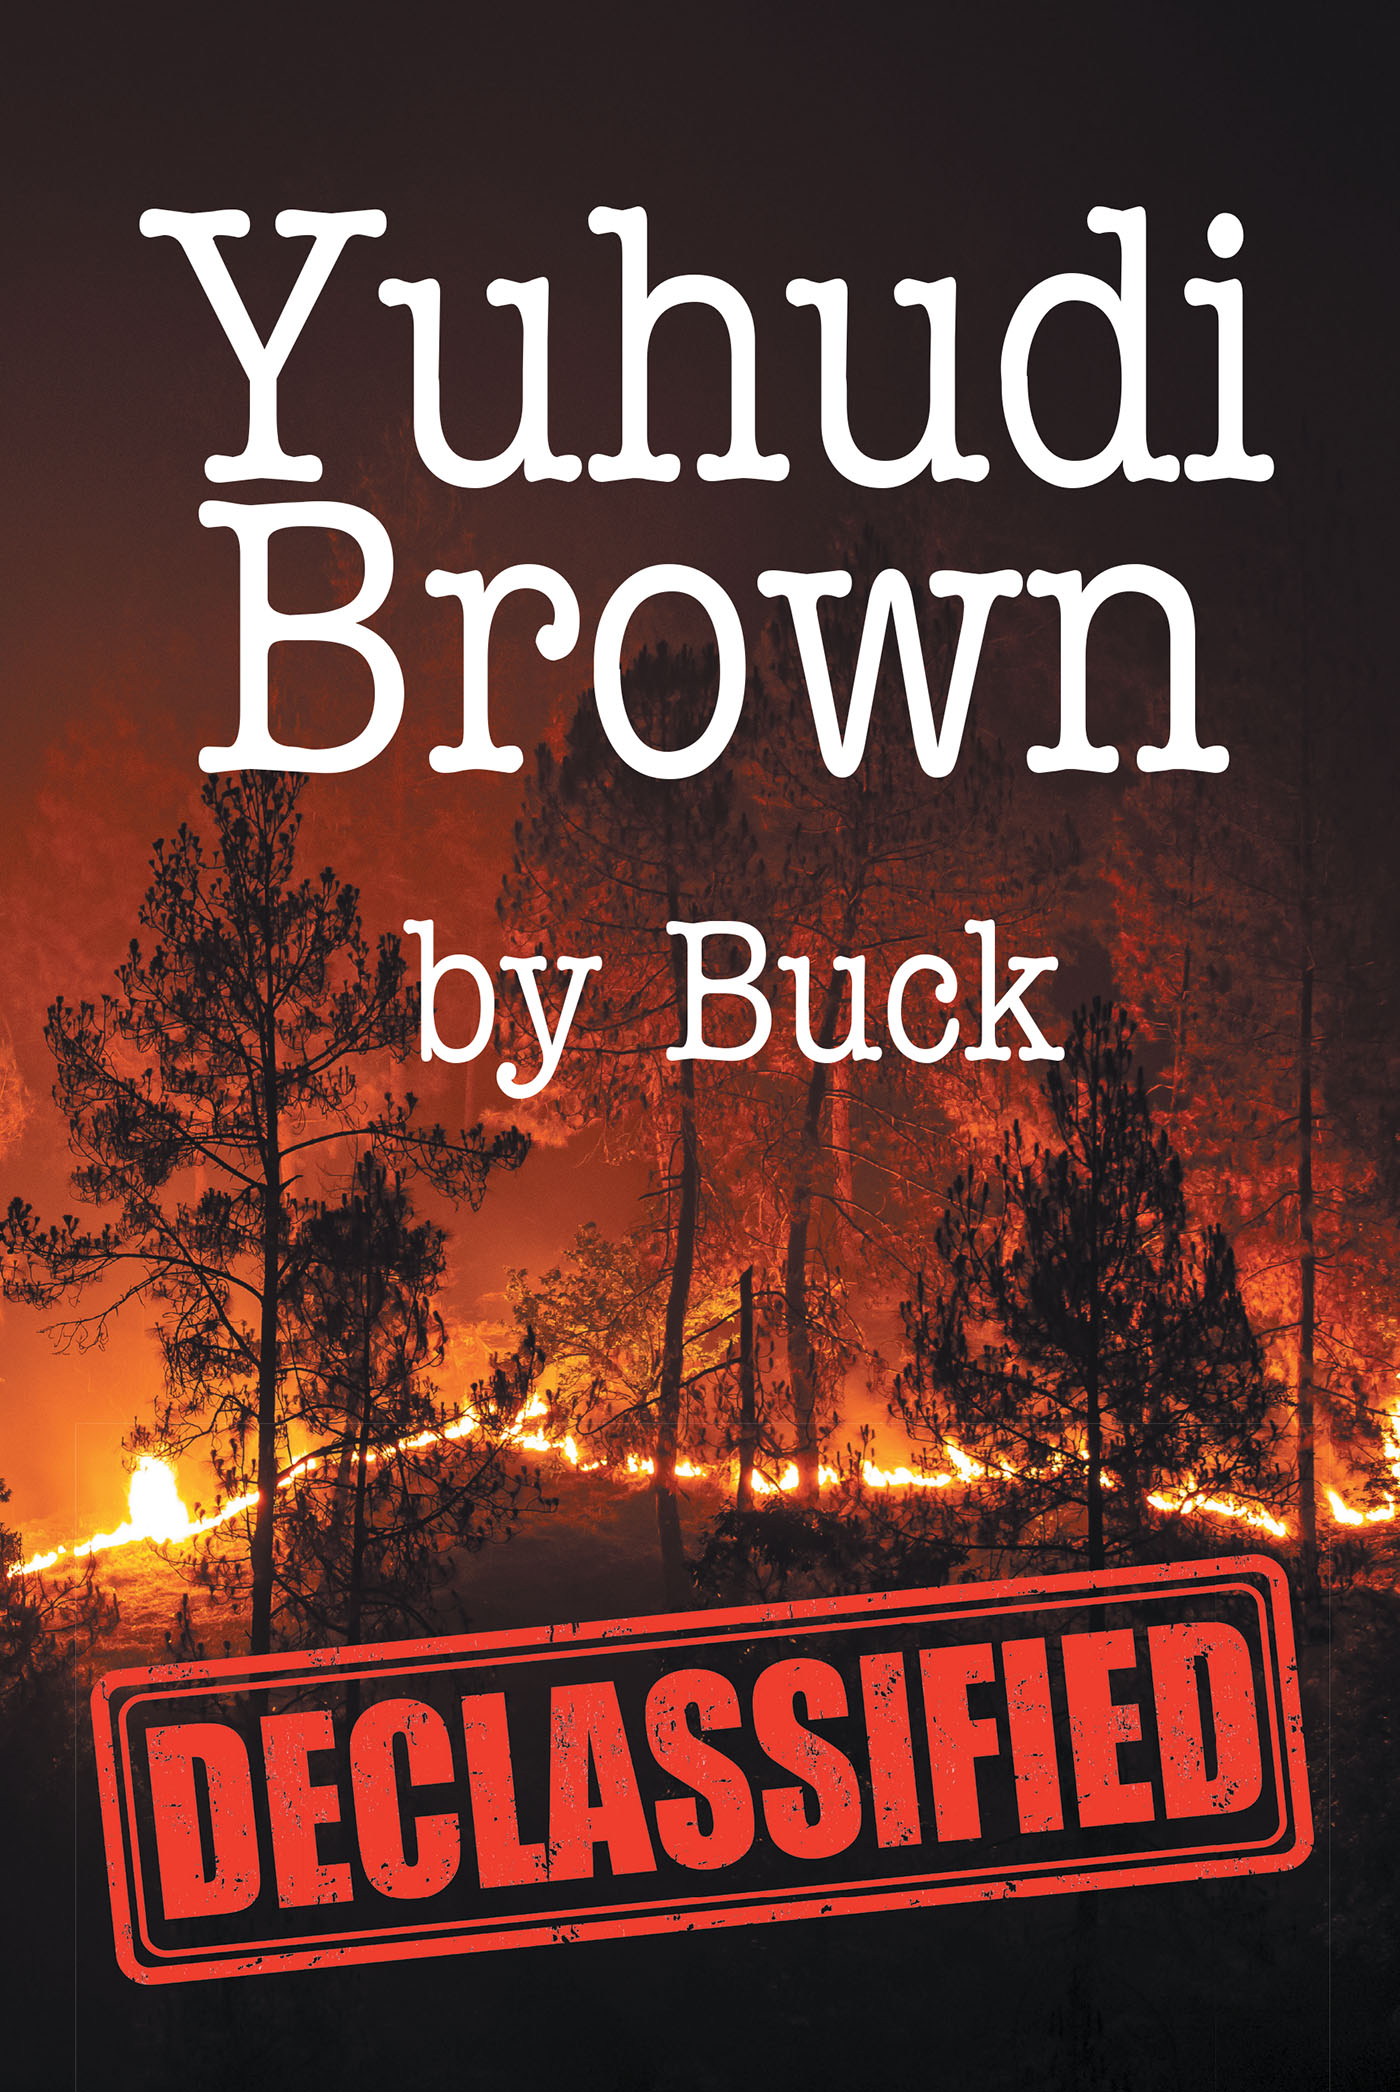 Yuhudi Brown Cover Image